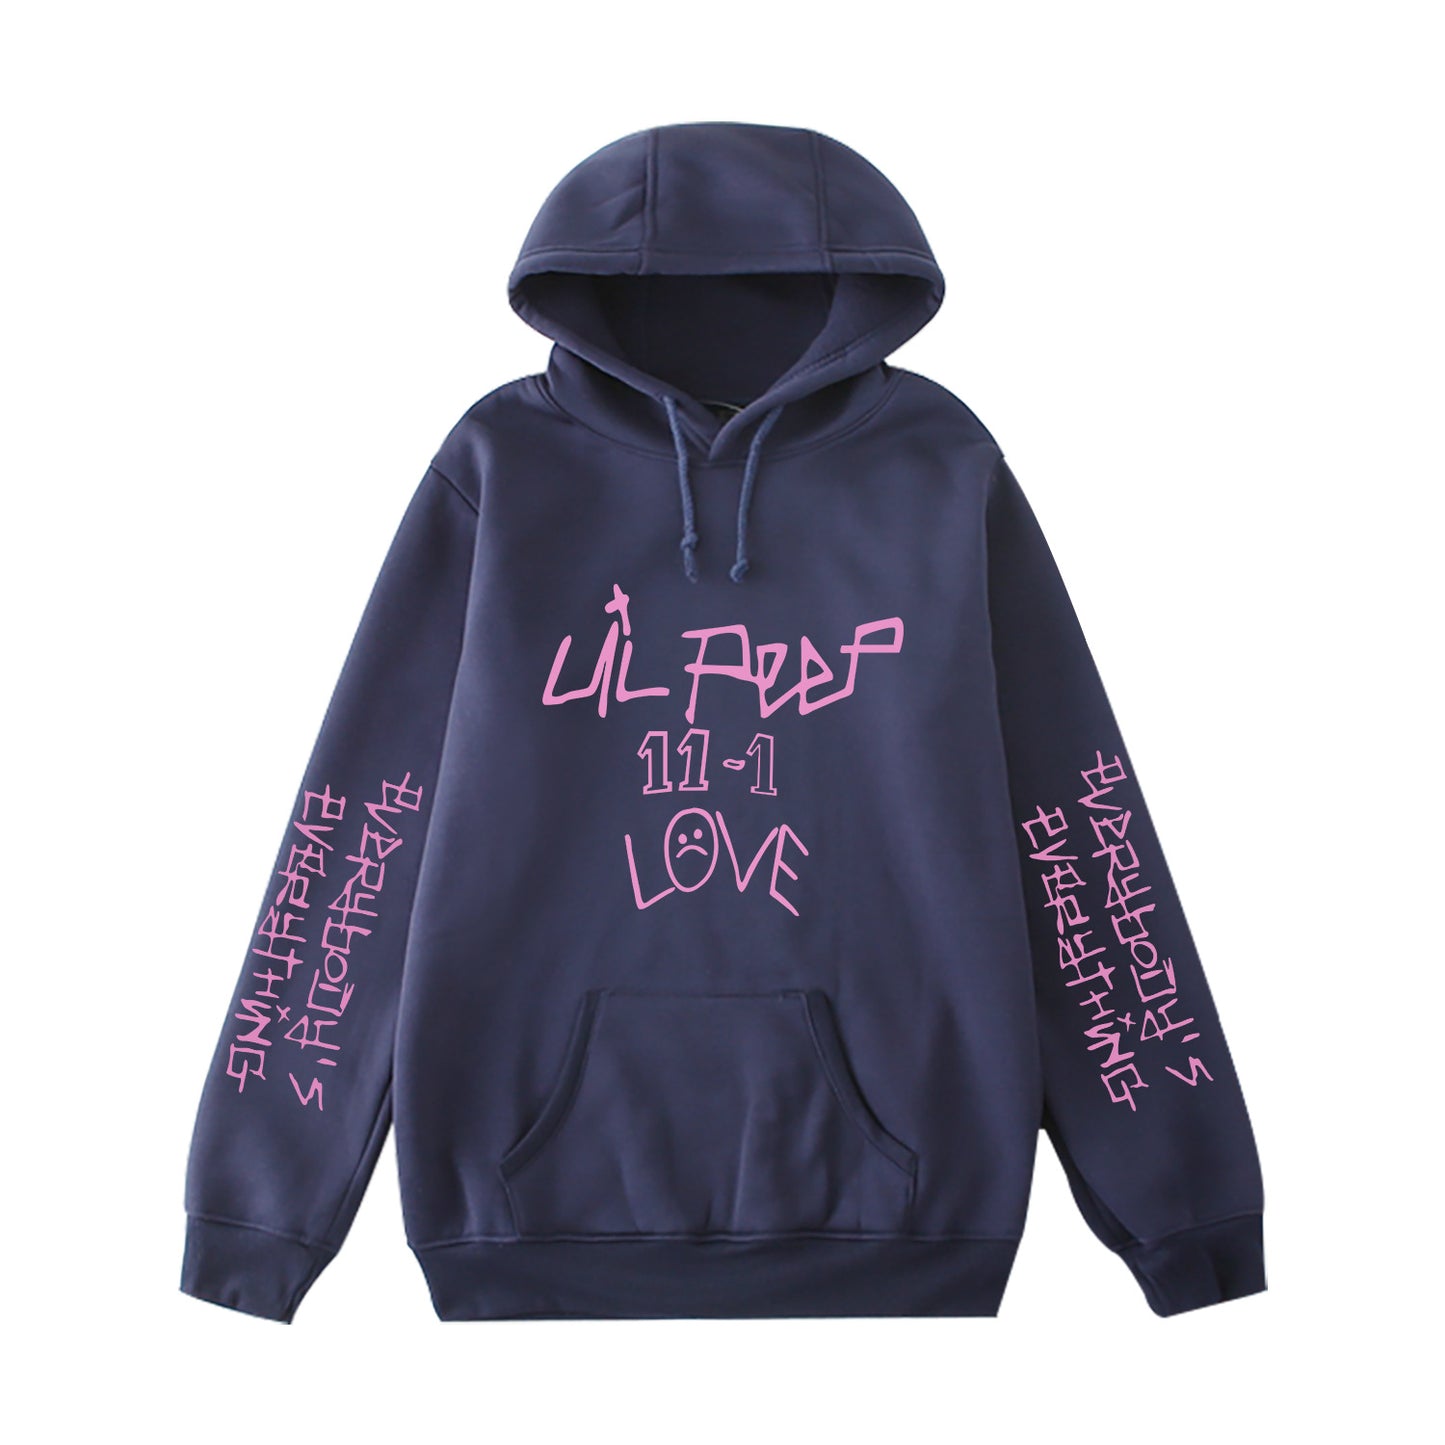 Lil Peep Commemorative Unisex Hoodie – Limited Edition